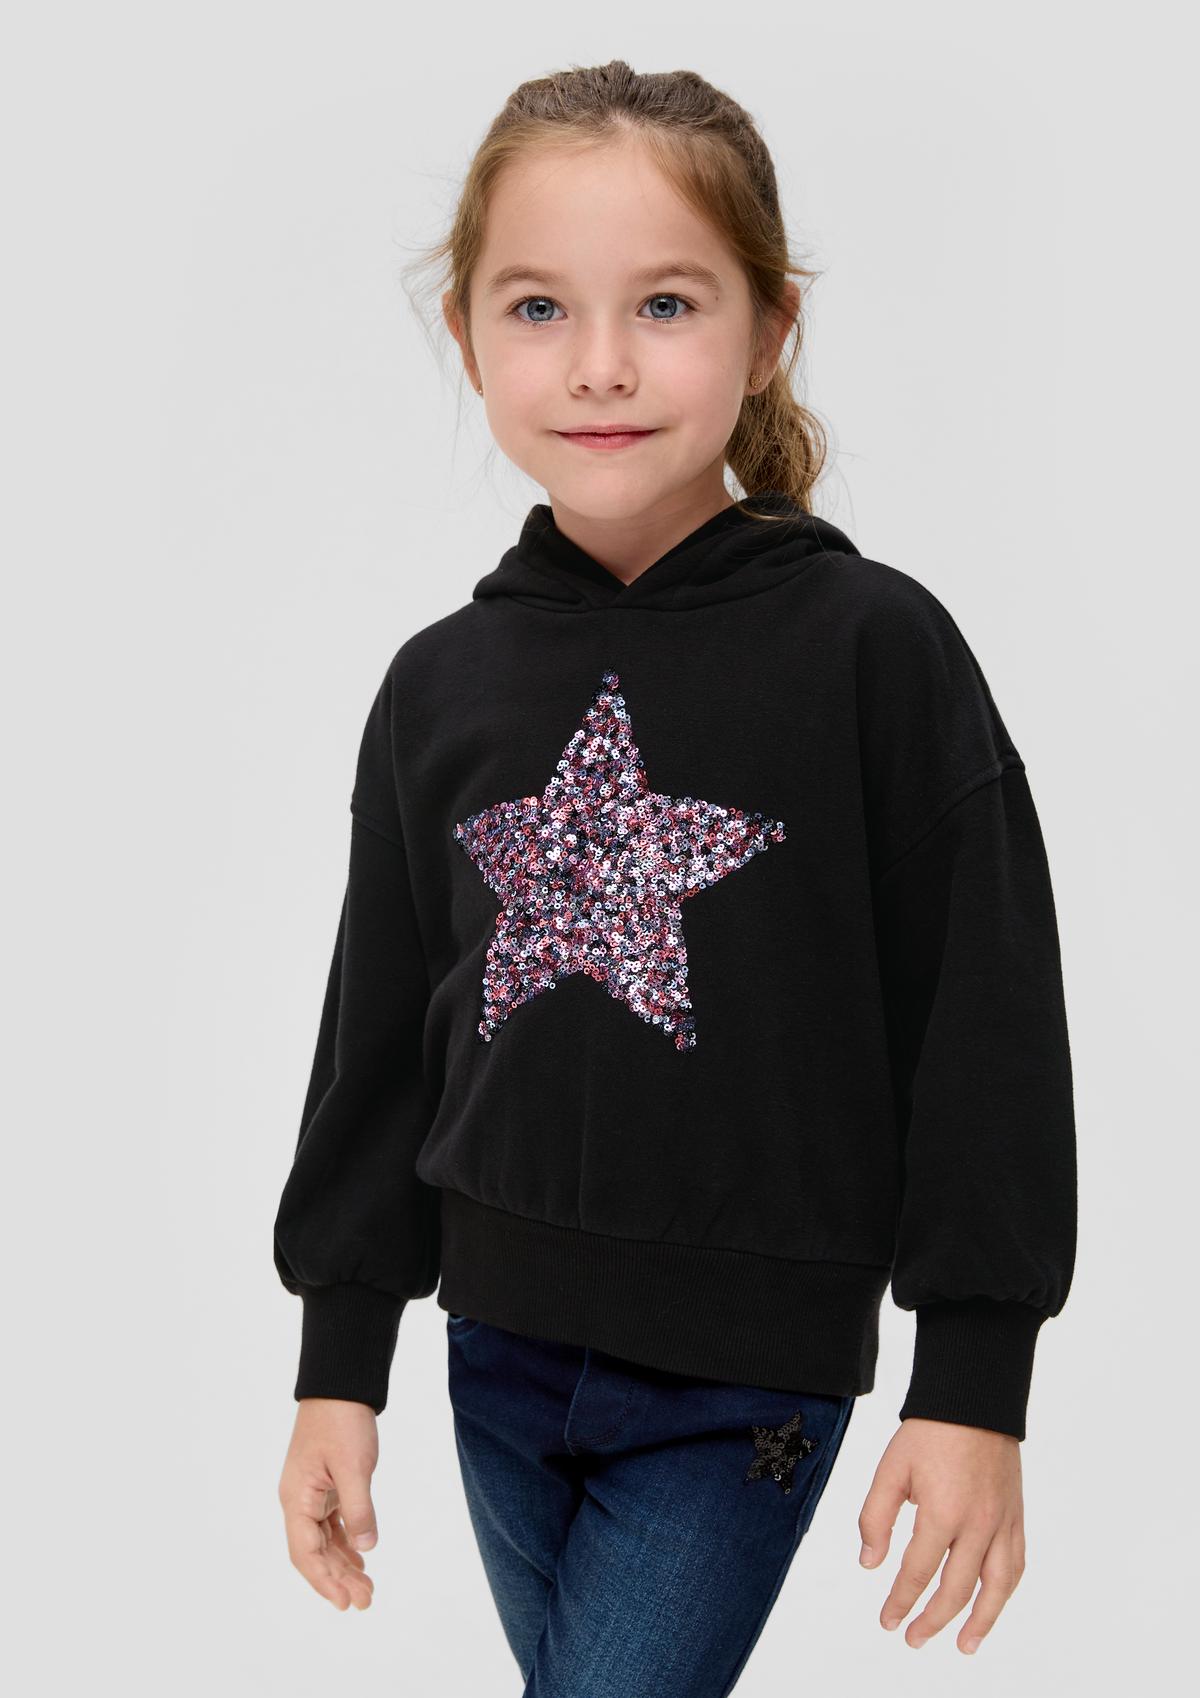 Sweatshirt with a sequin star